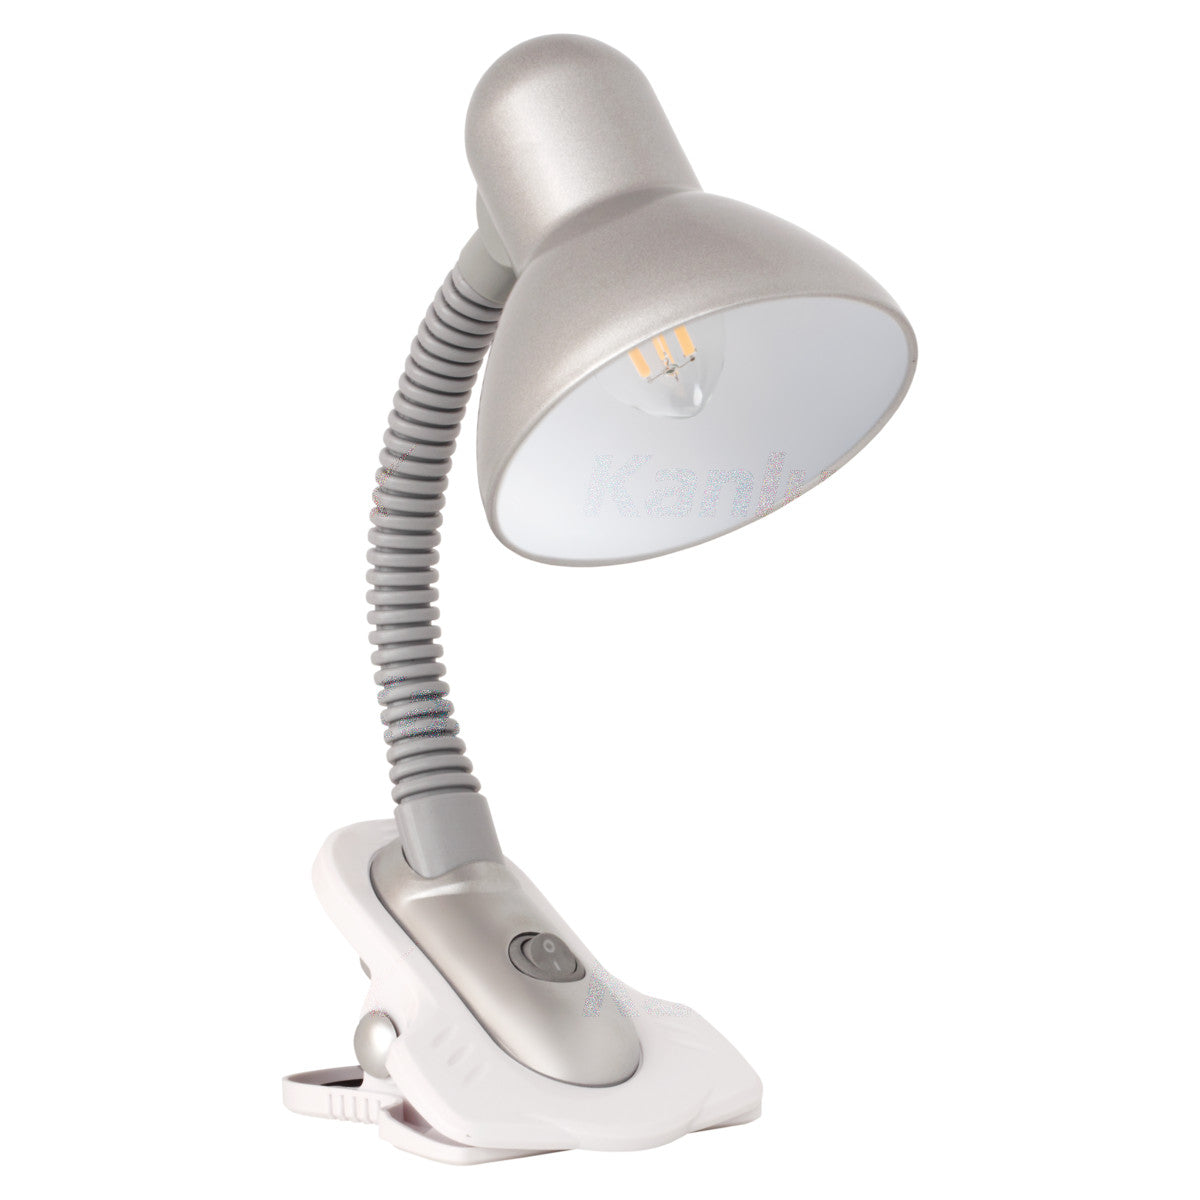 Kanlux SUZI Desk Study Adjustable E27 LED Switch Reading Table Clip Clamp Lamp Light